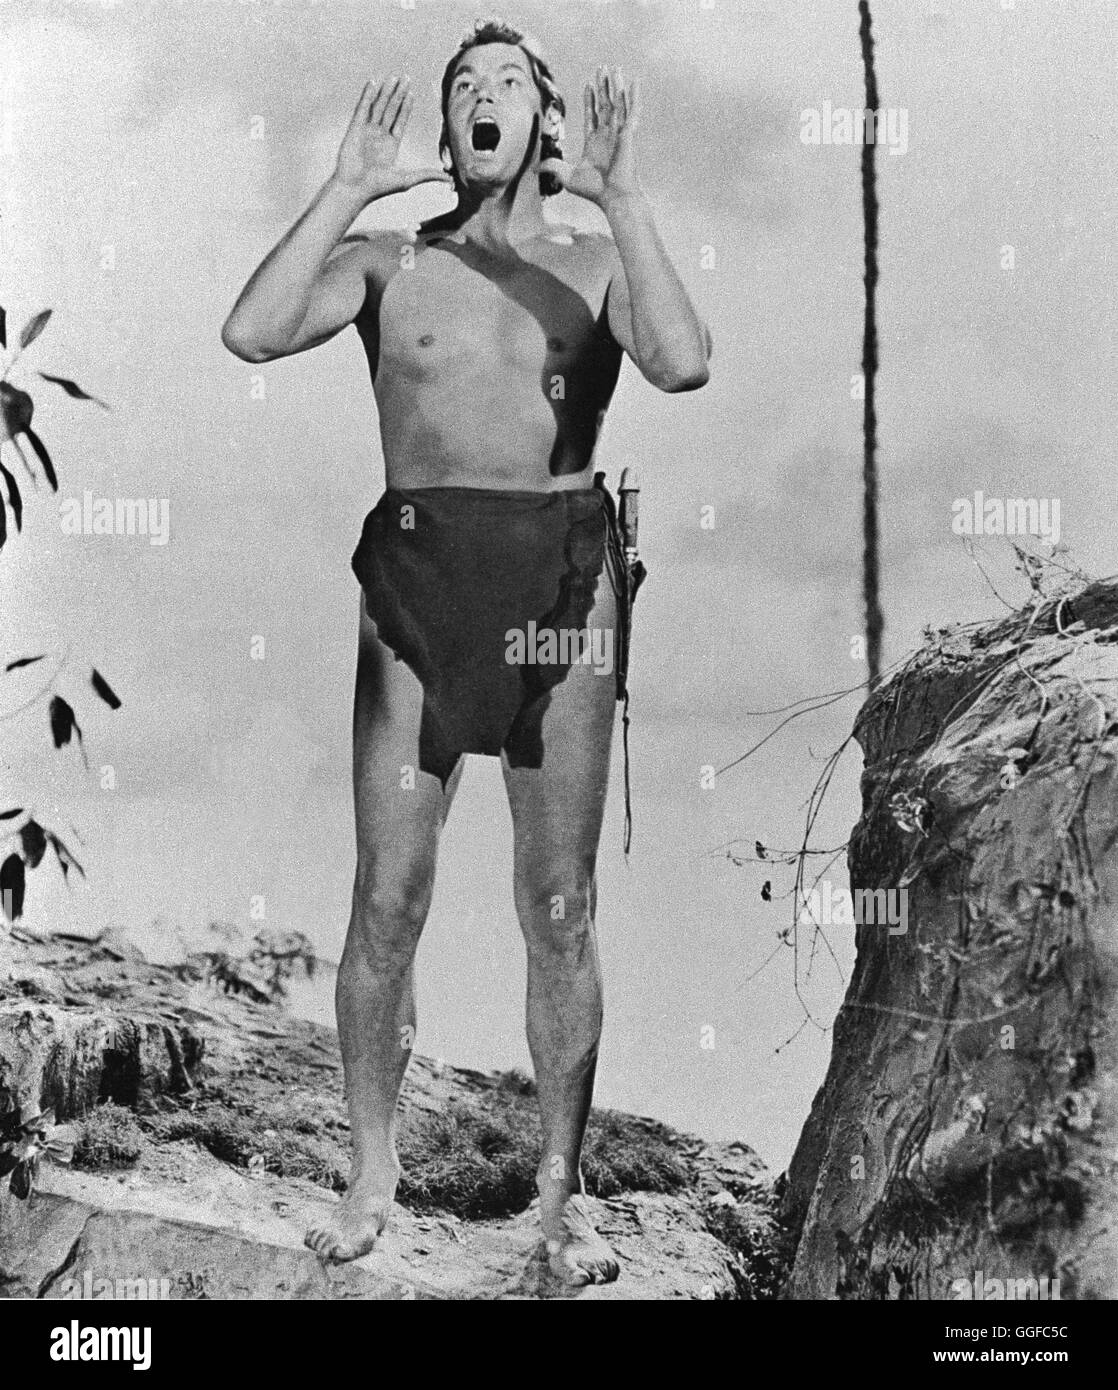 AFFENMENSCH / DER TARZAN Tarzan, l'homme singe USA 1932 / Johnny  Weissmüller als 'Tarzan' aka. Tarzan, l'homme singe Photo Stock - Alamy